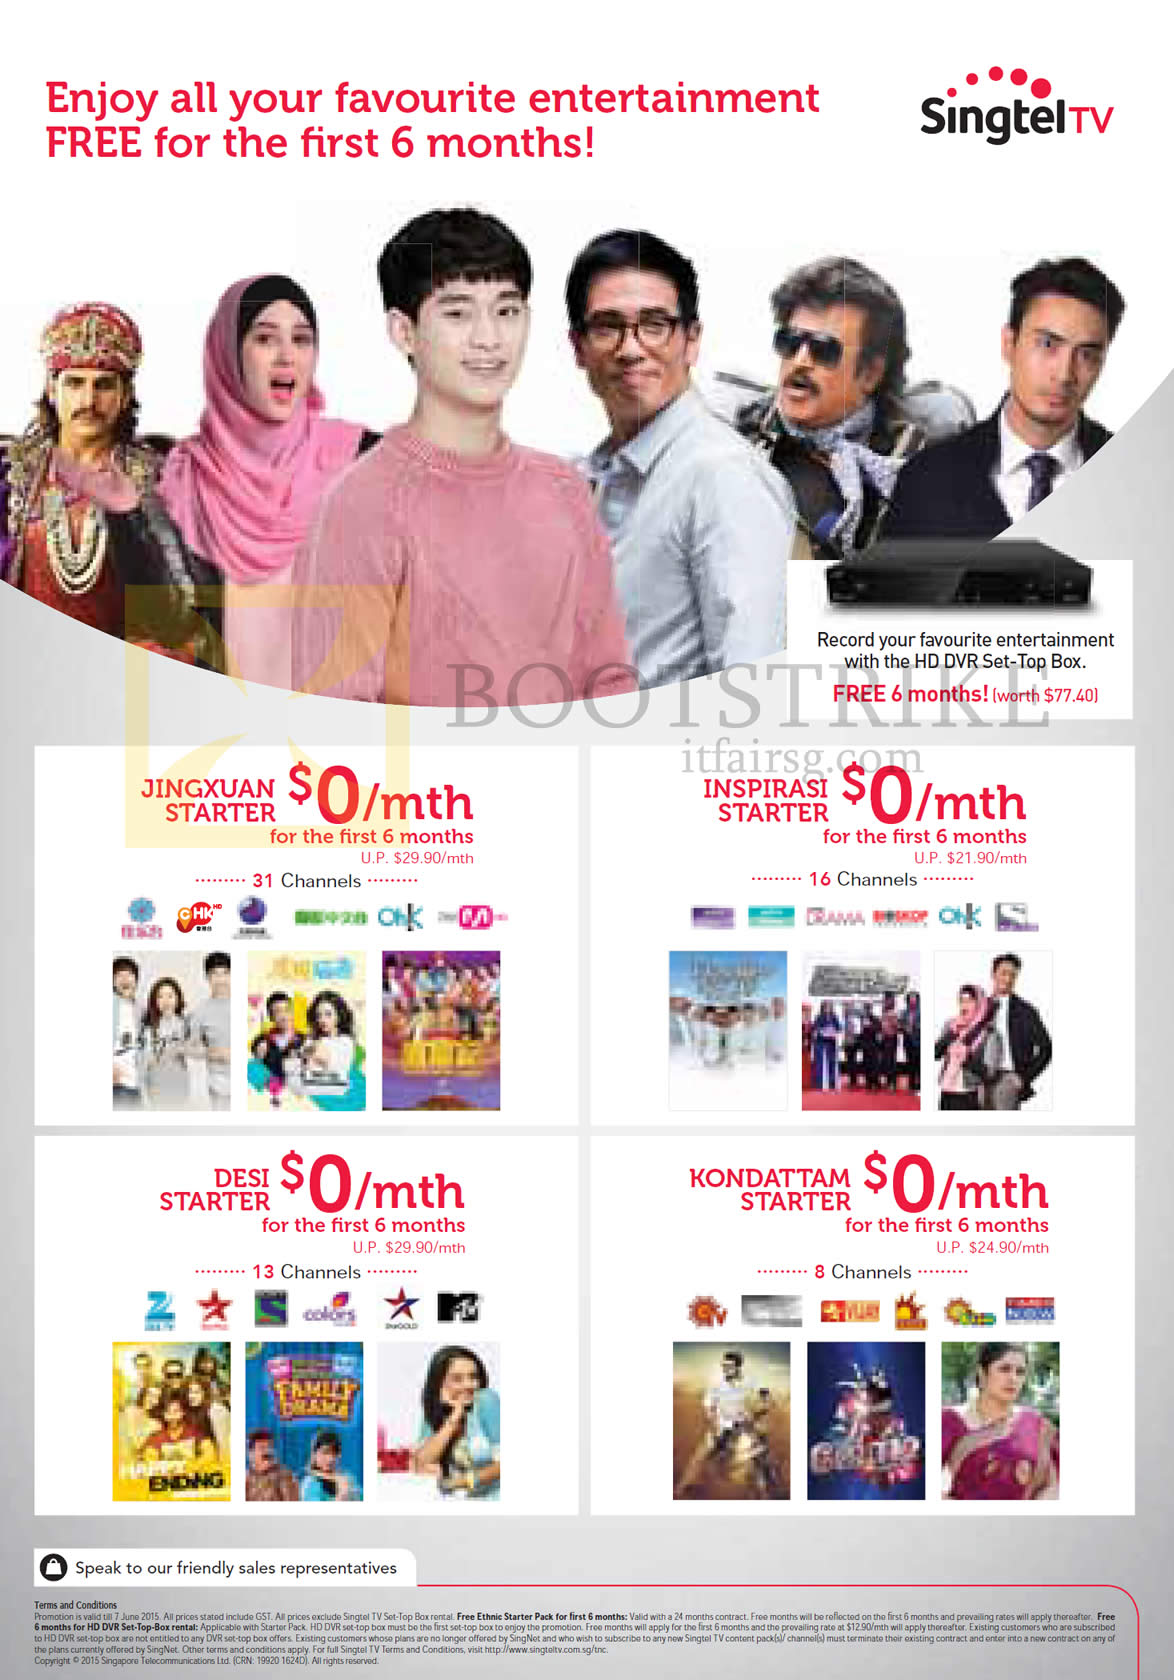 PC SHOW 2015 price list image brochure of Singtel TV Packs Free 6 Months, Jingxuan, Inspirasi, Desi Starter, Kondattam